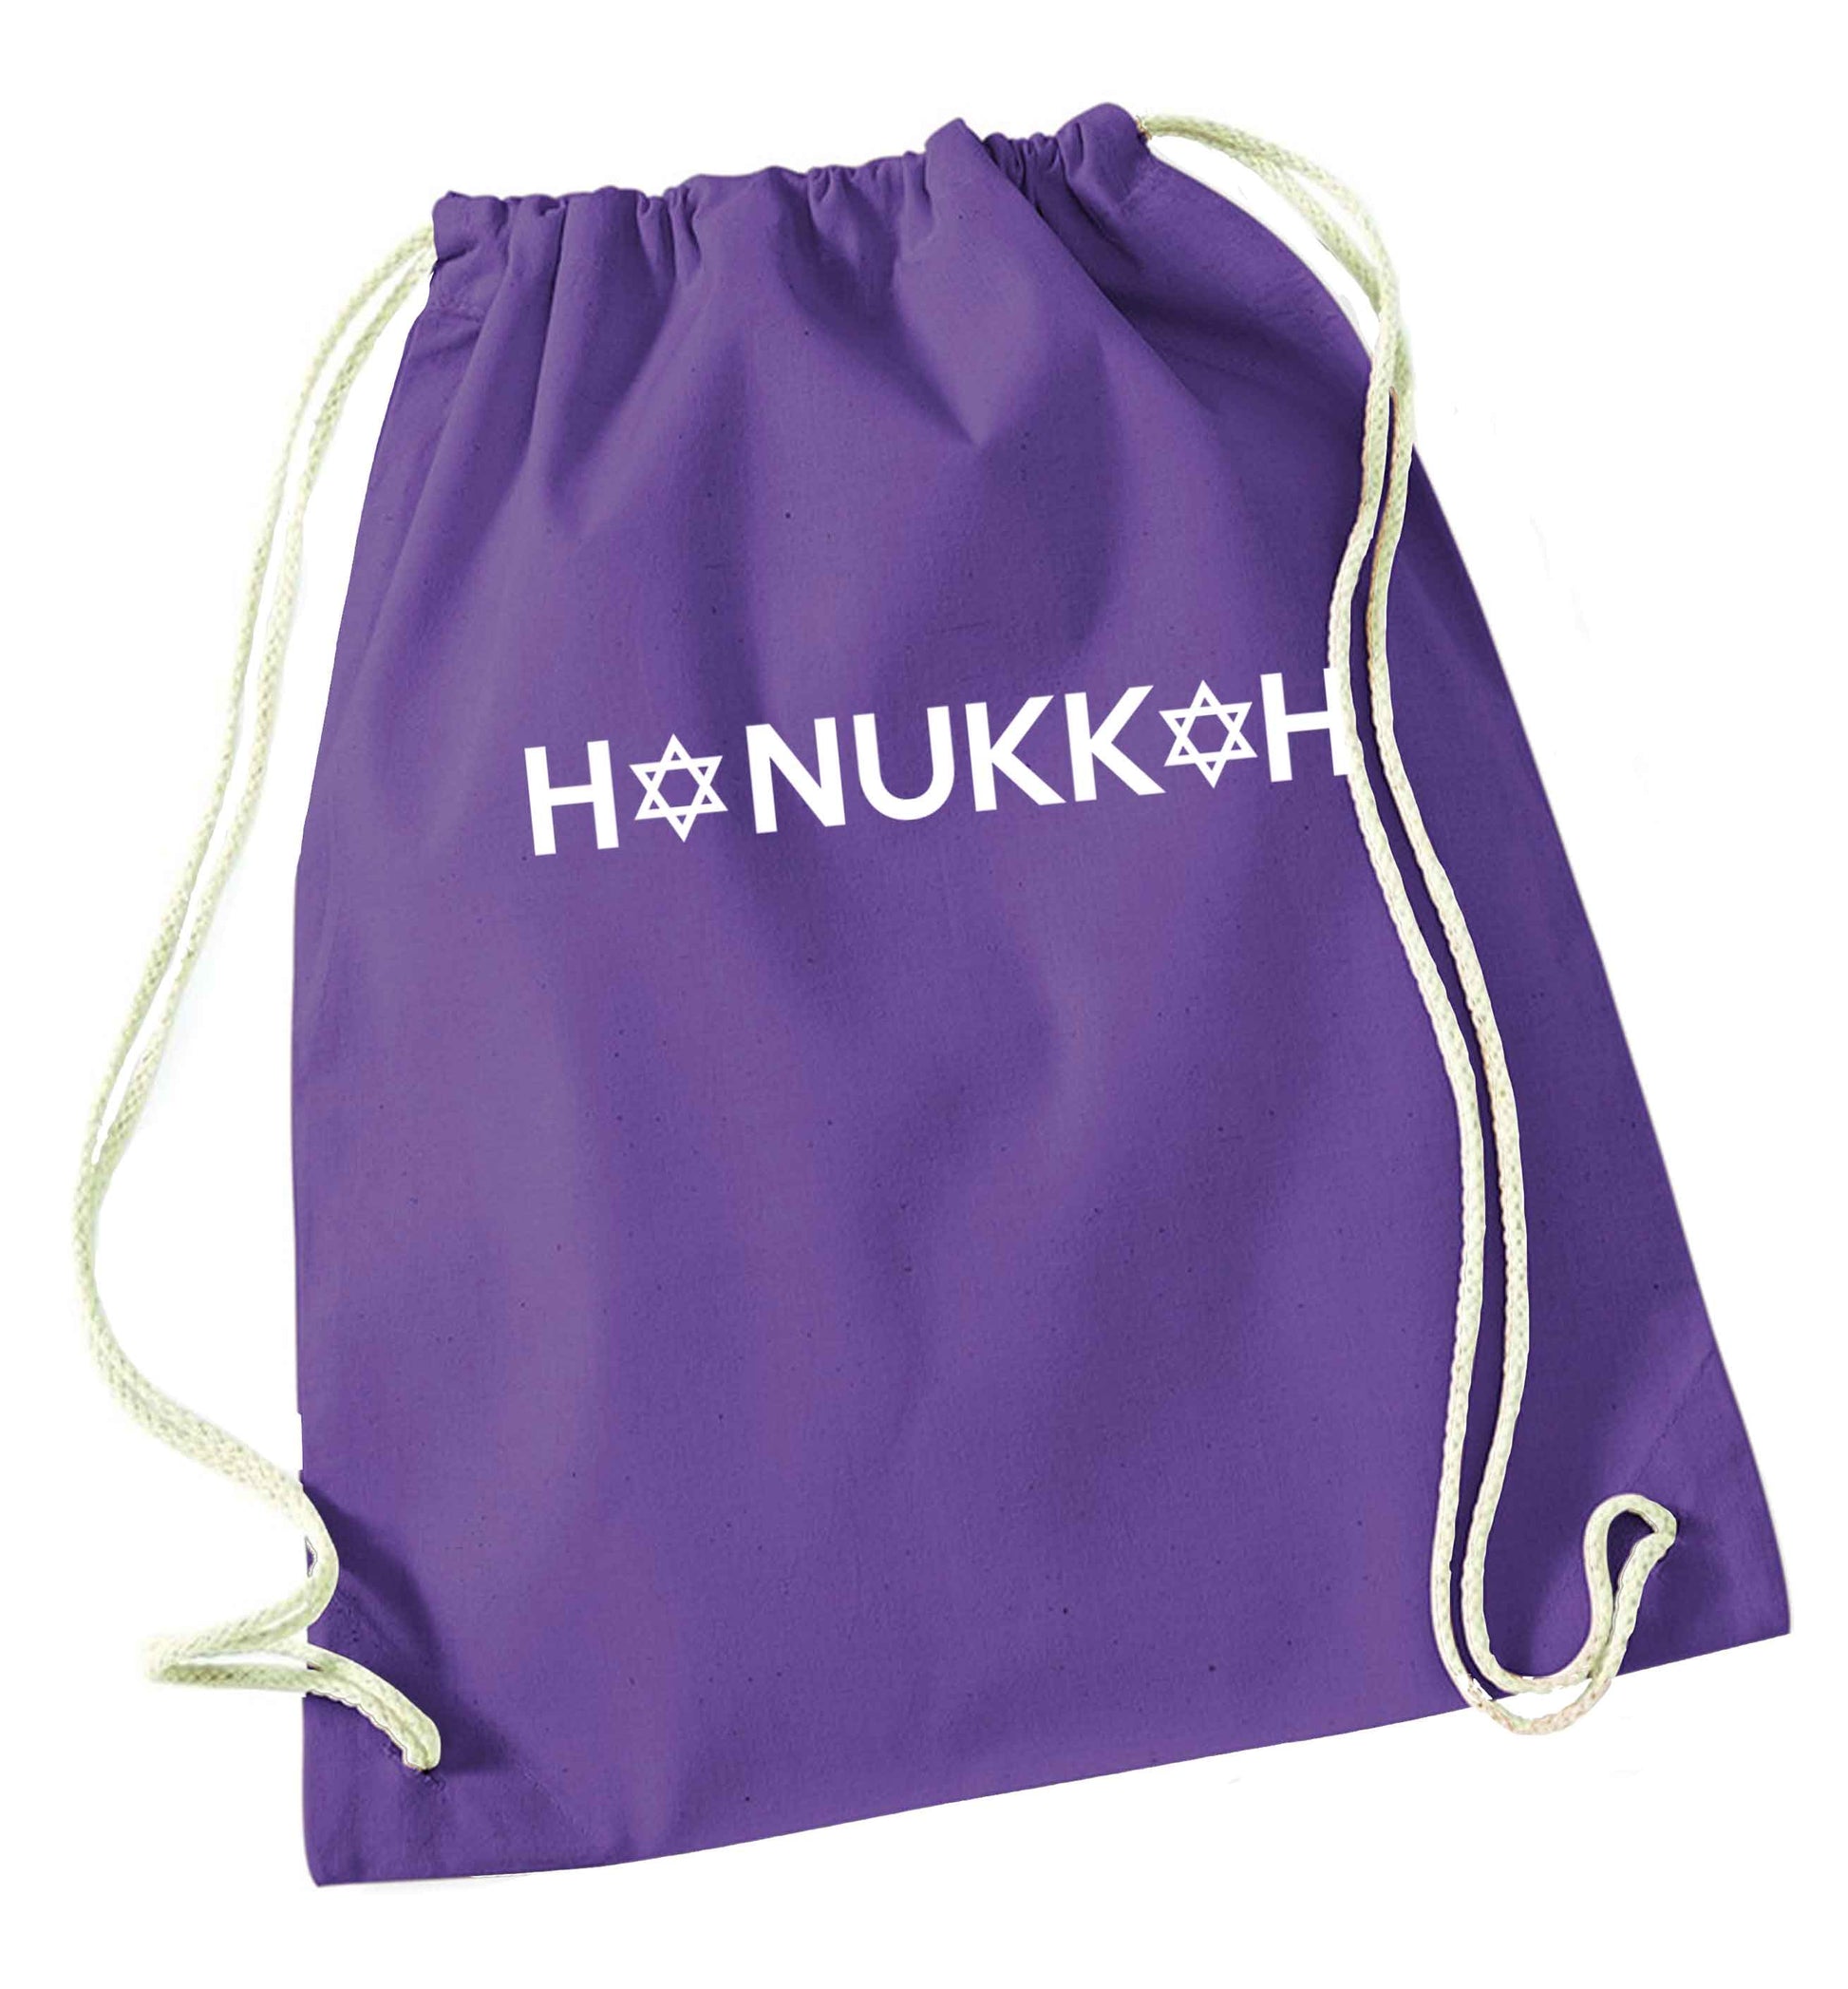 Hanukkah star of david purple drawstring bag